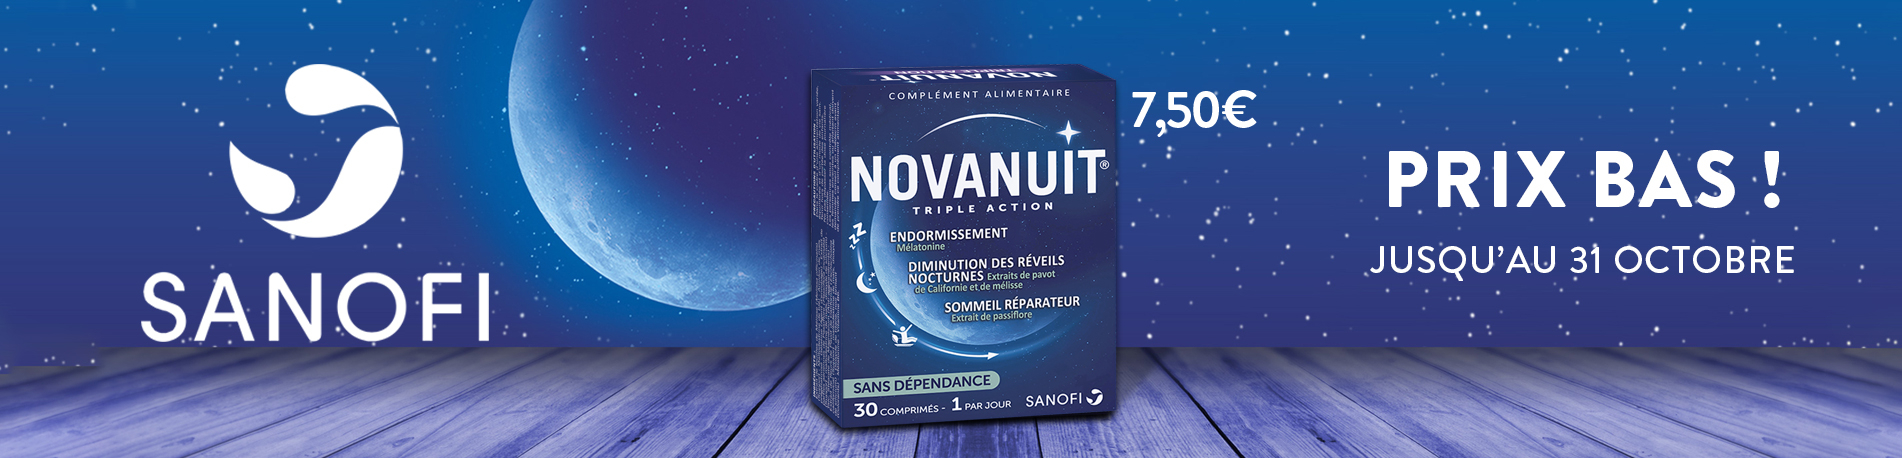 Promotion Novanuit